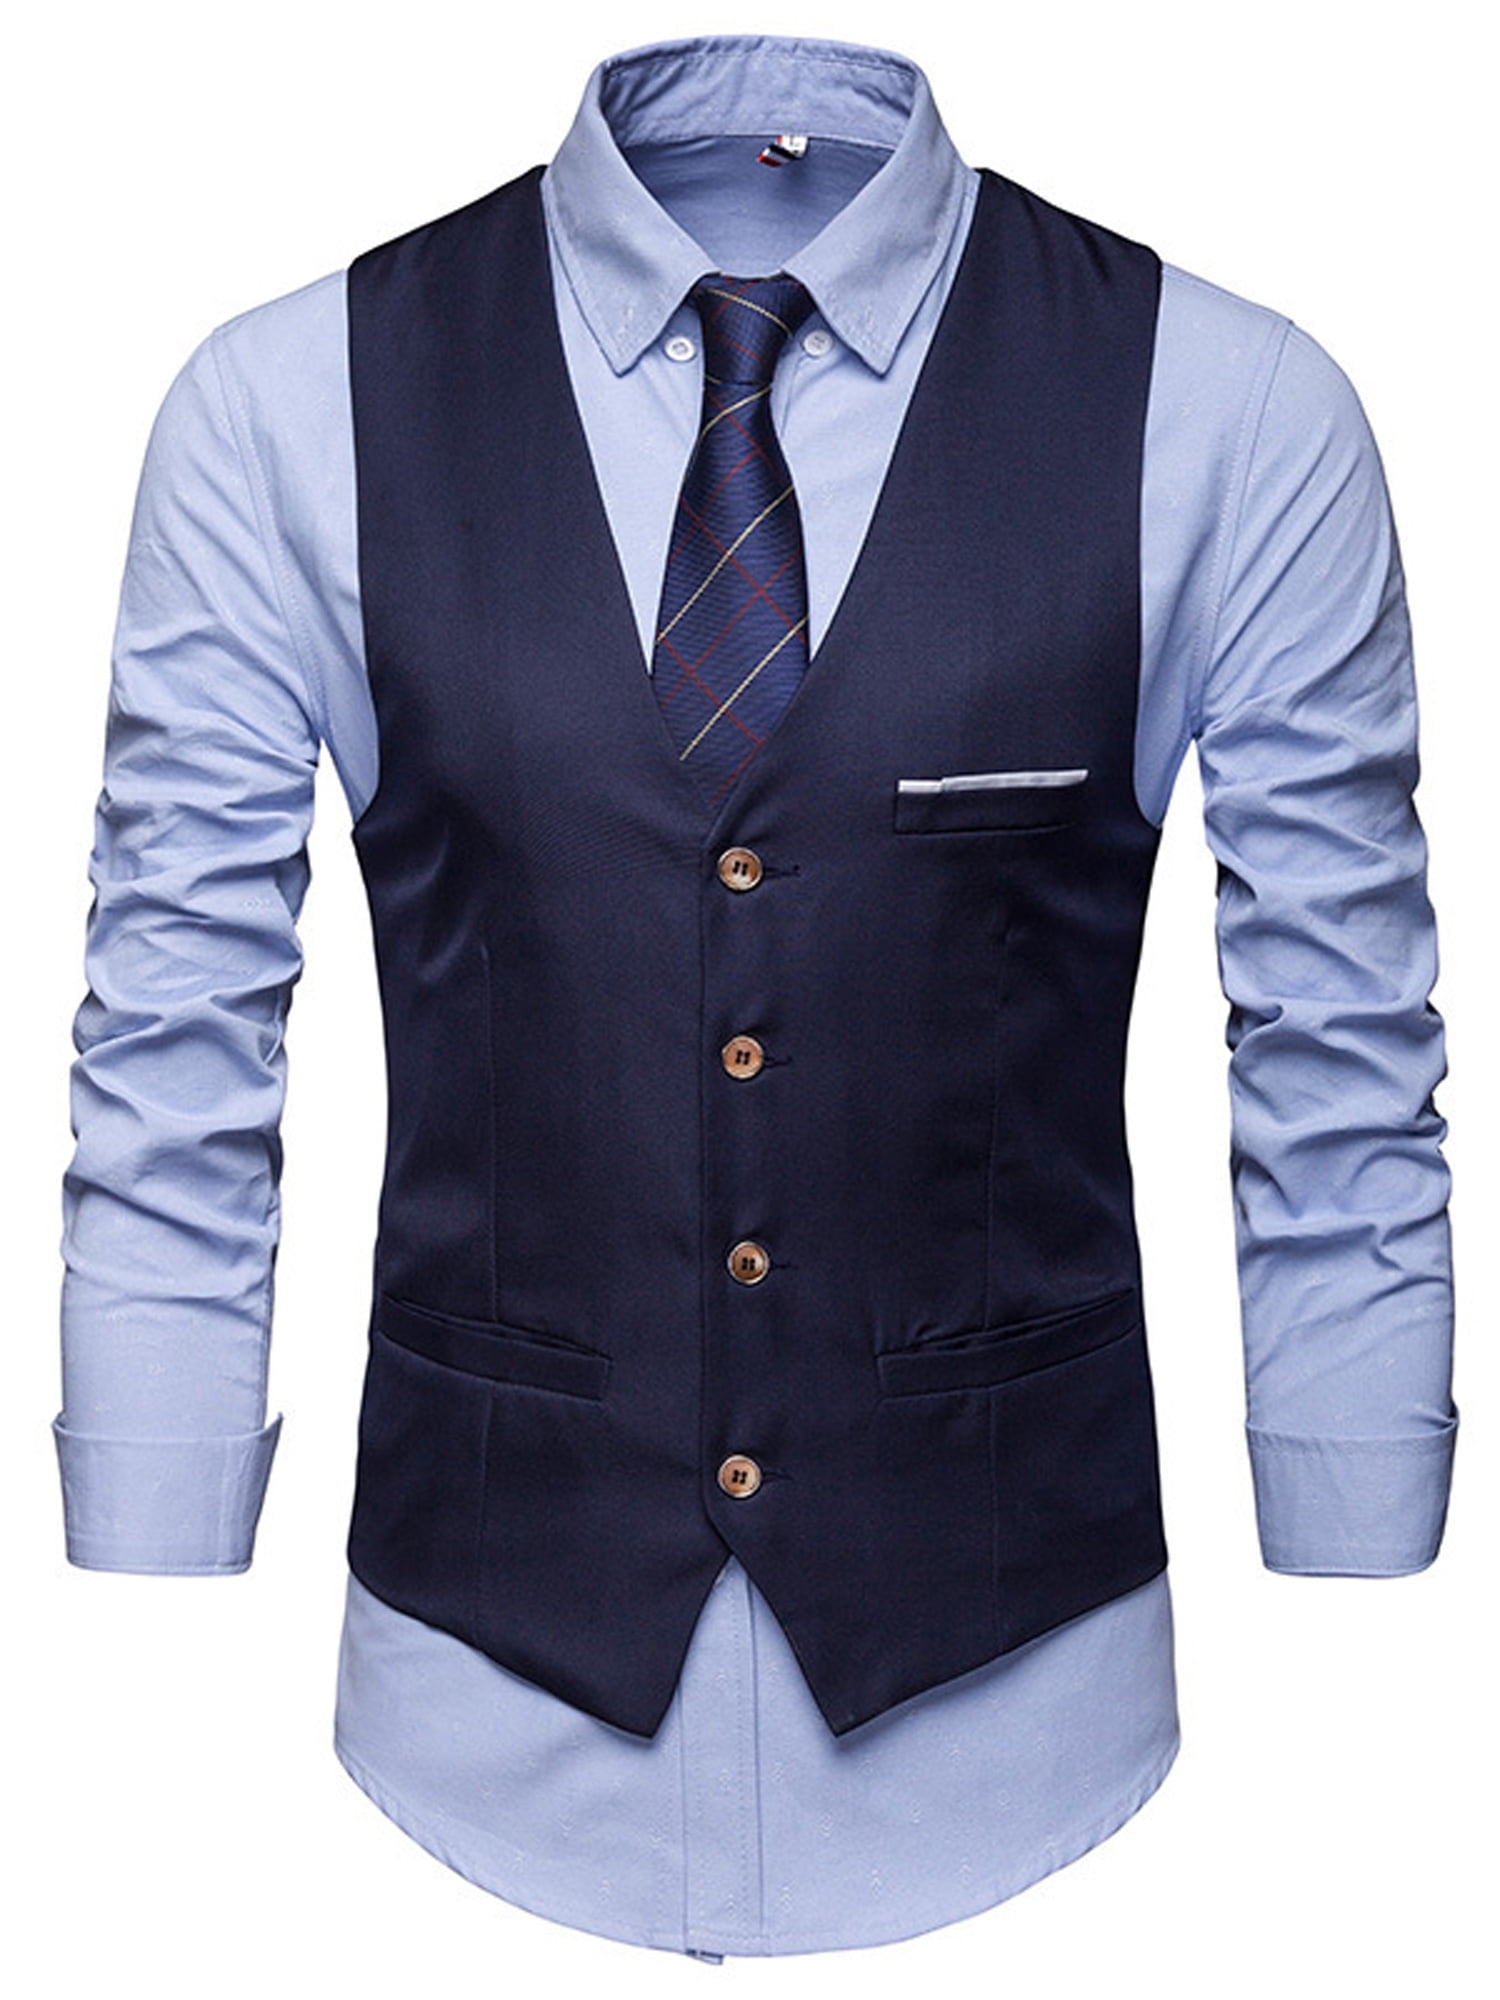 Wodstyle - Men's Gents Formal Business Weeding Suit Vest Tuxedo ...